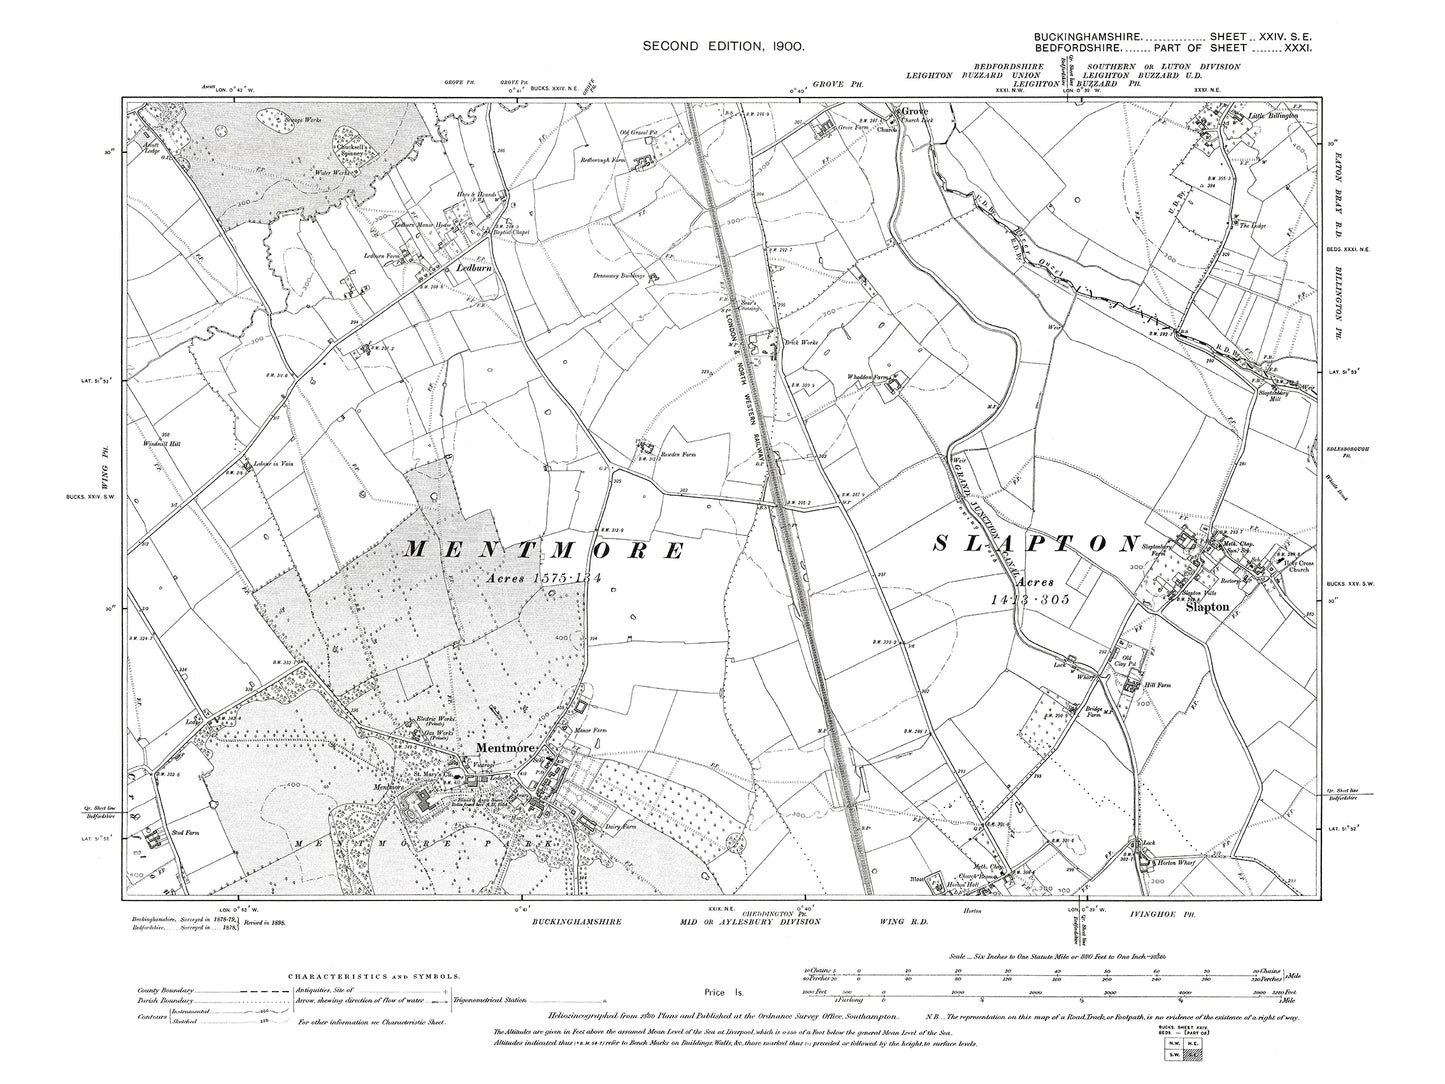 Old OS map dated 1900, showing Mentmore, Slapton, Ledburn, Horton (north) in Buckinghamshire 24SE